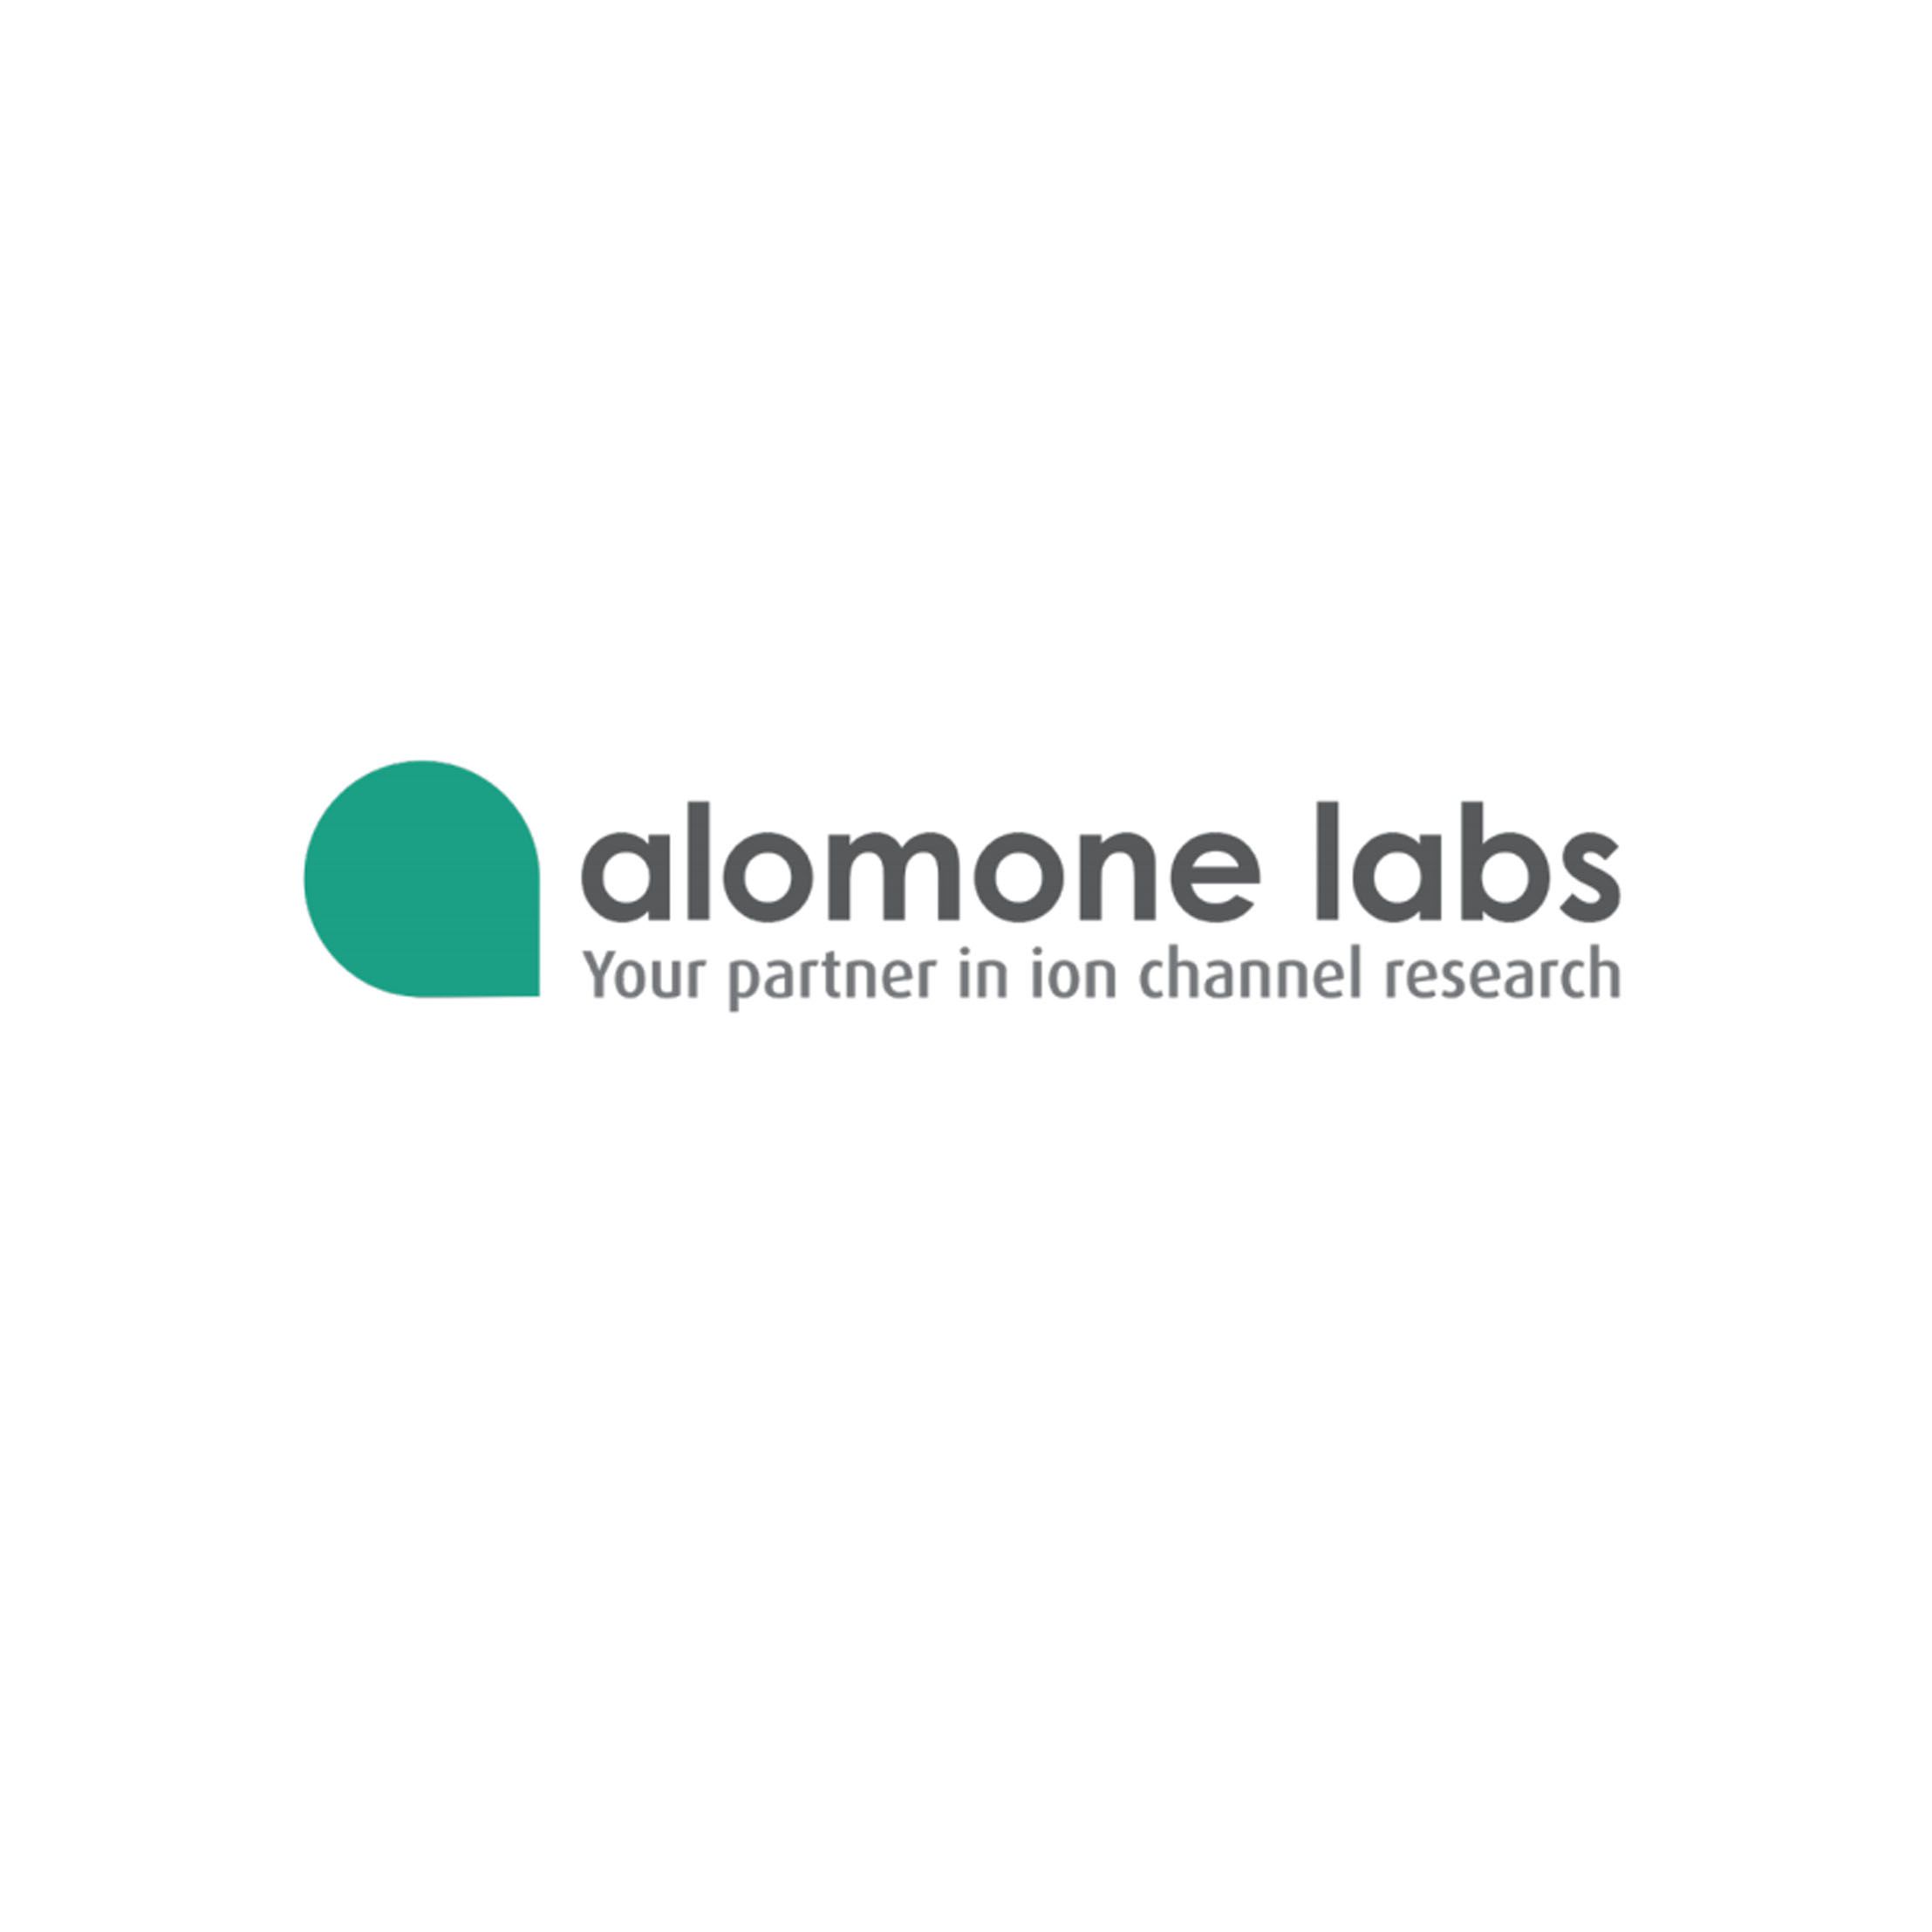 Alomone labs抗体、小分子、蛋白质和肽